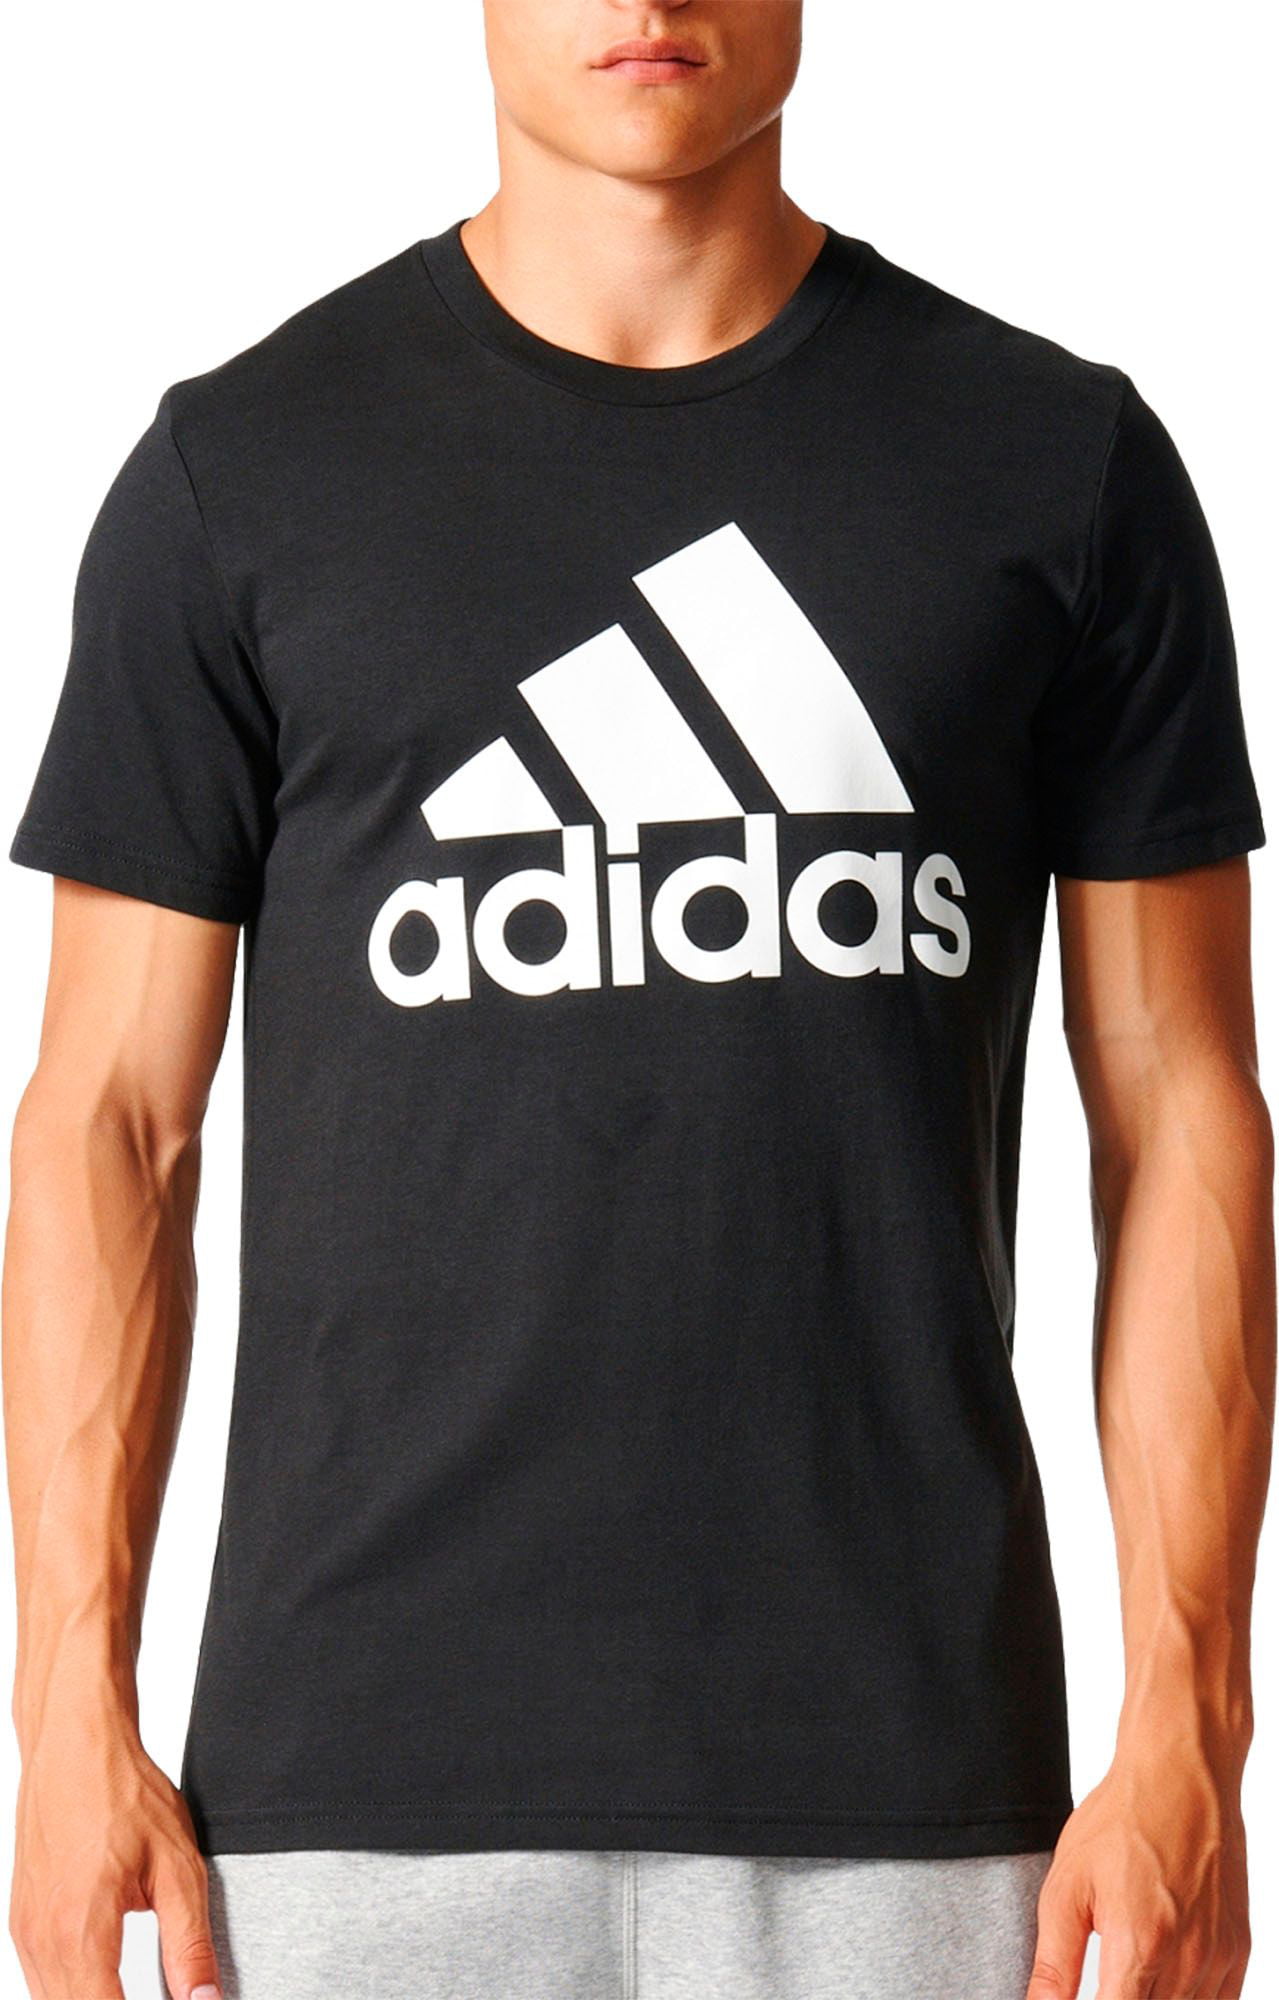 Adidas - adidas Men's Badge Of Sport Classic T-Shirt - Walmart.com